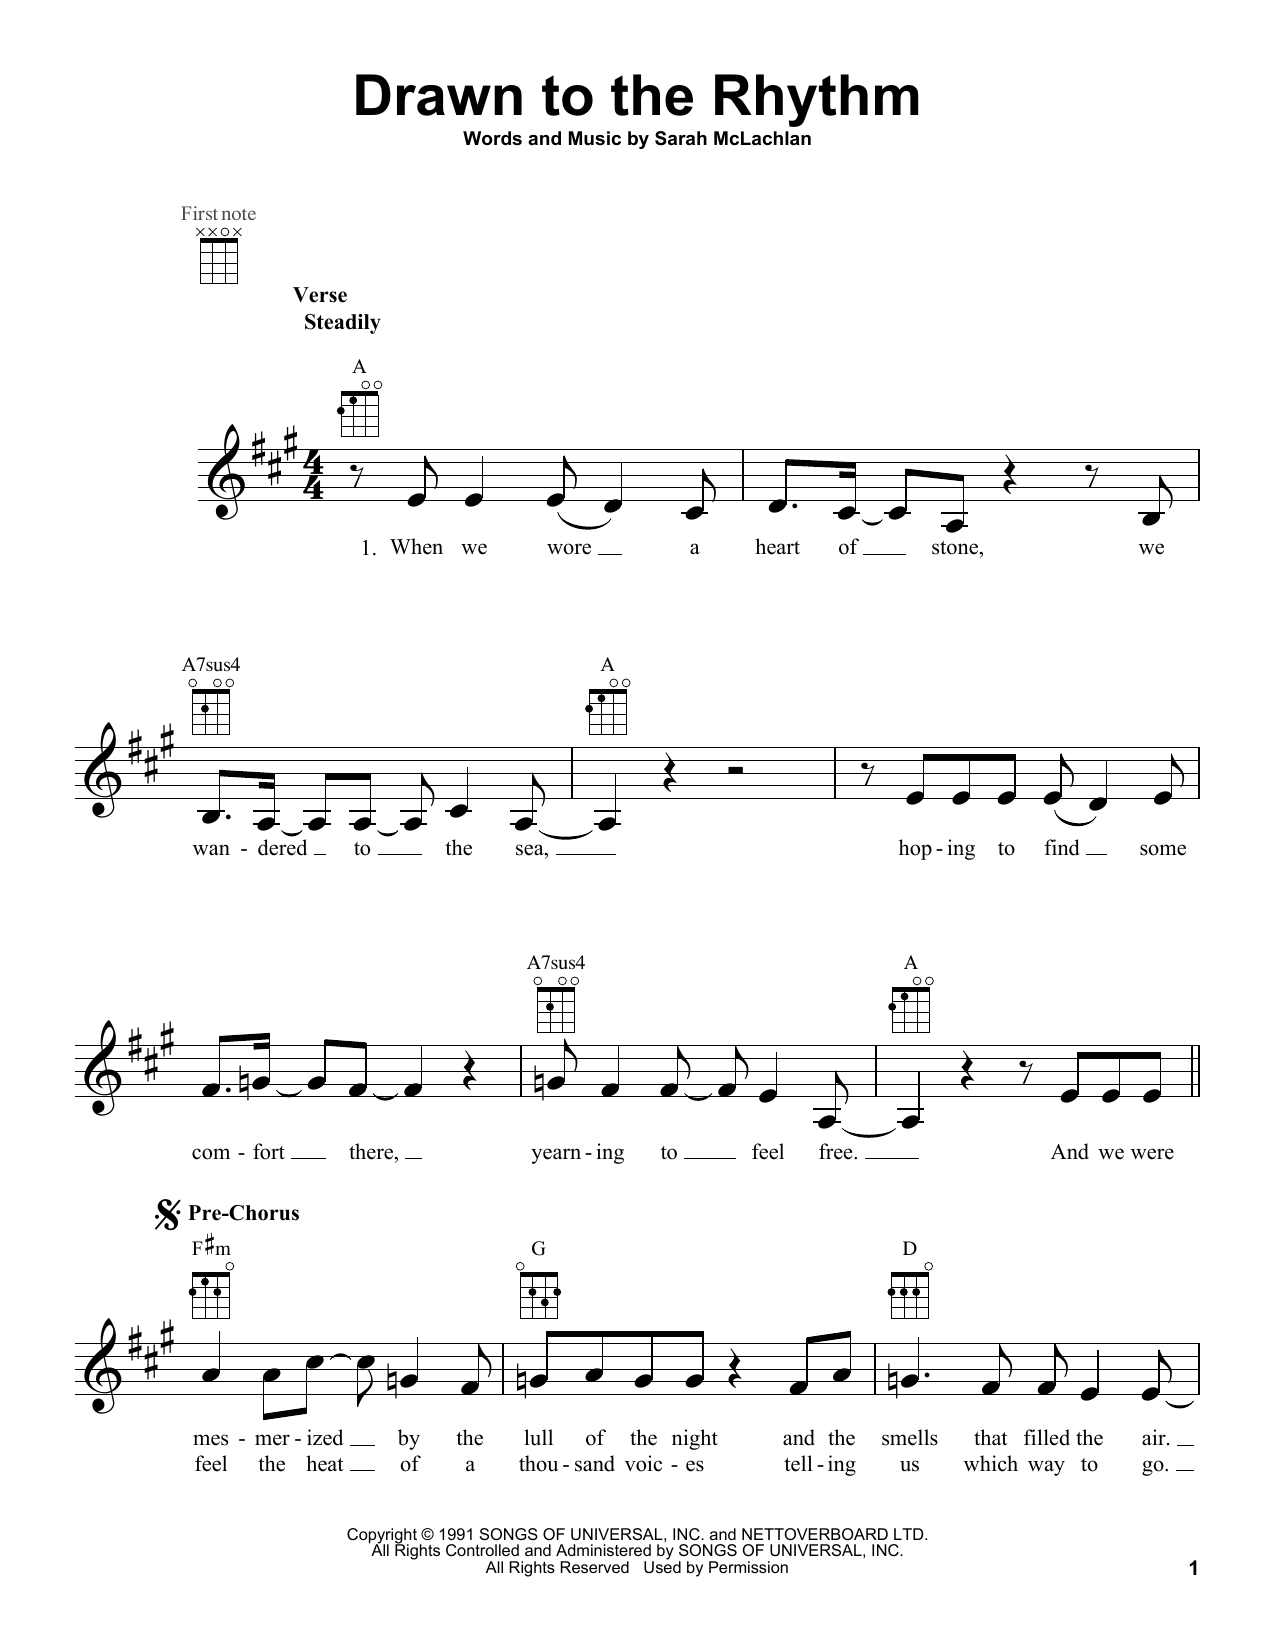 Sarah McLachlan Drawn To The Rhythm Sheet Music Notes & Chords for Ukulele - Download or Print PDF